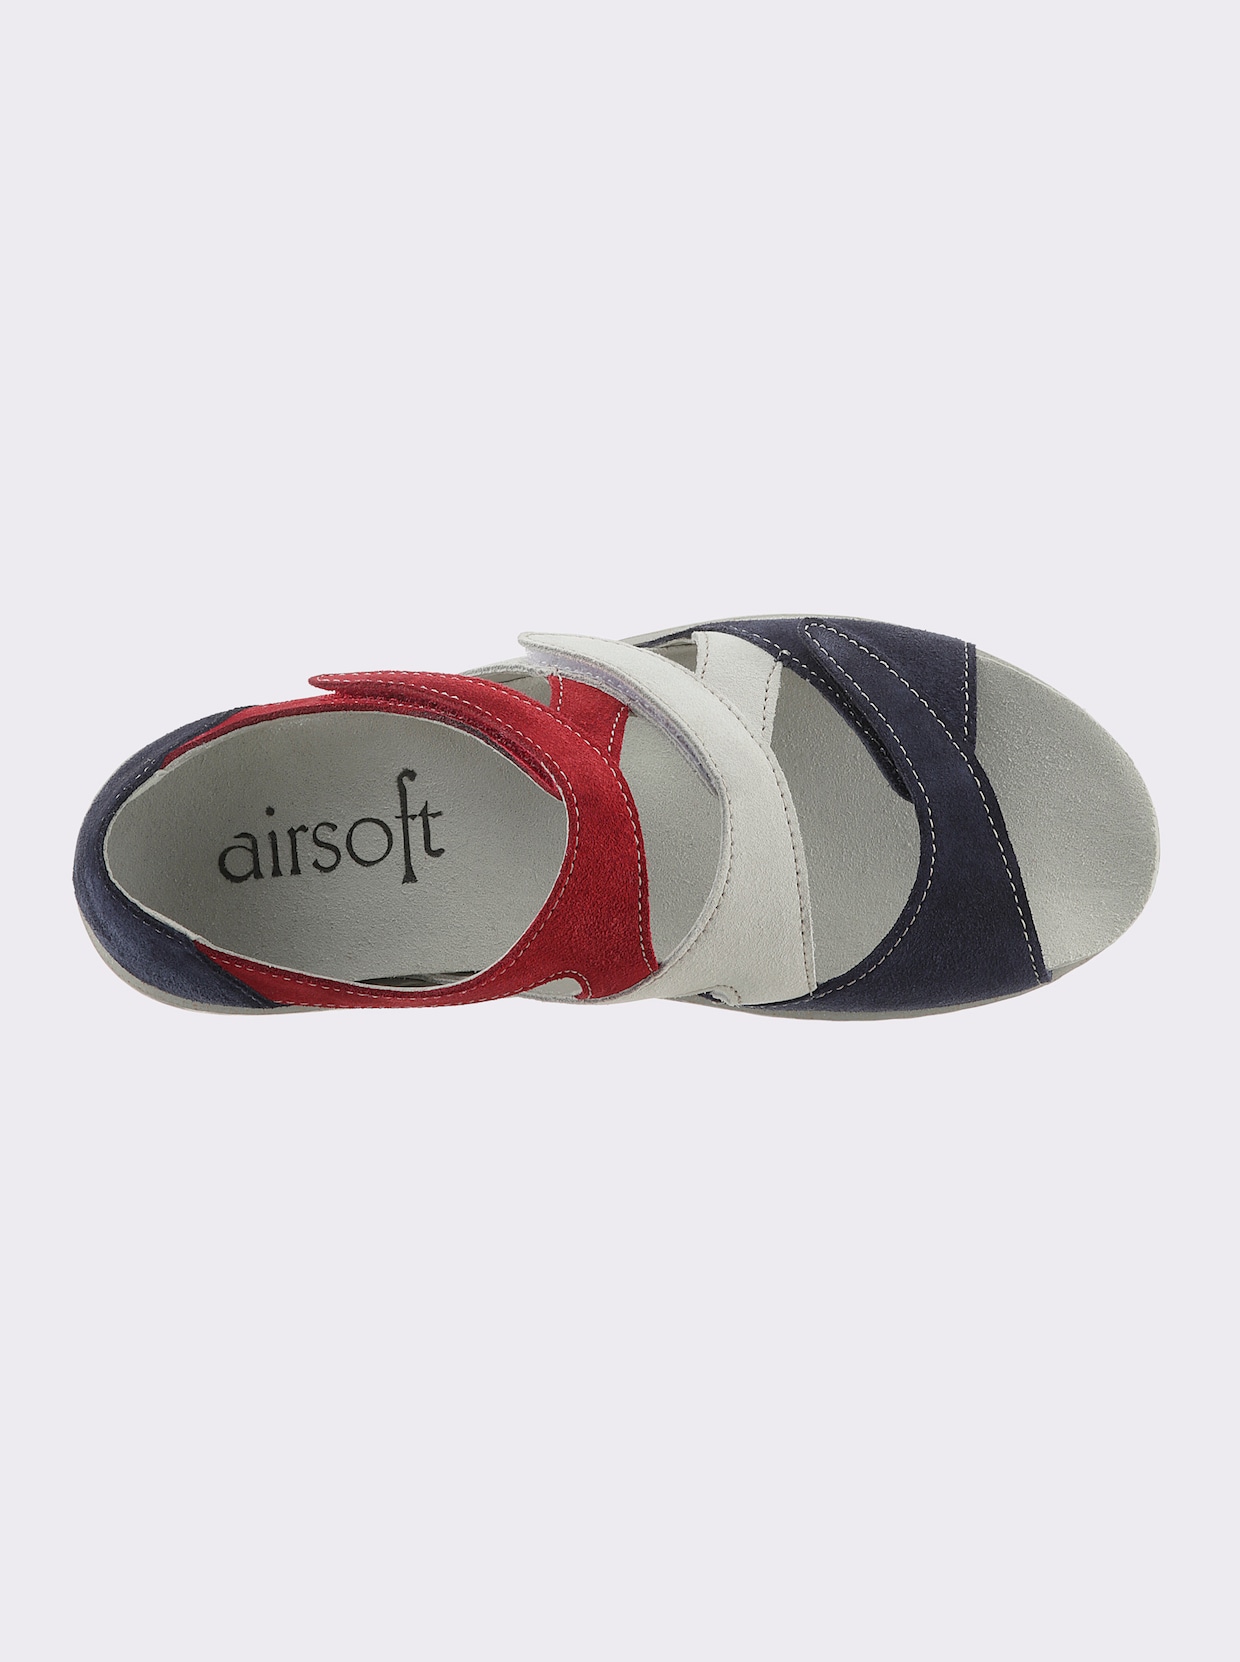 airsoft comfort+ Sandale - marine-weiss